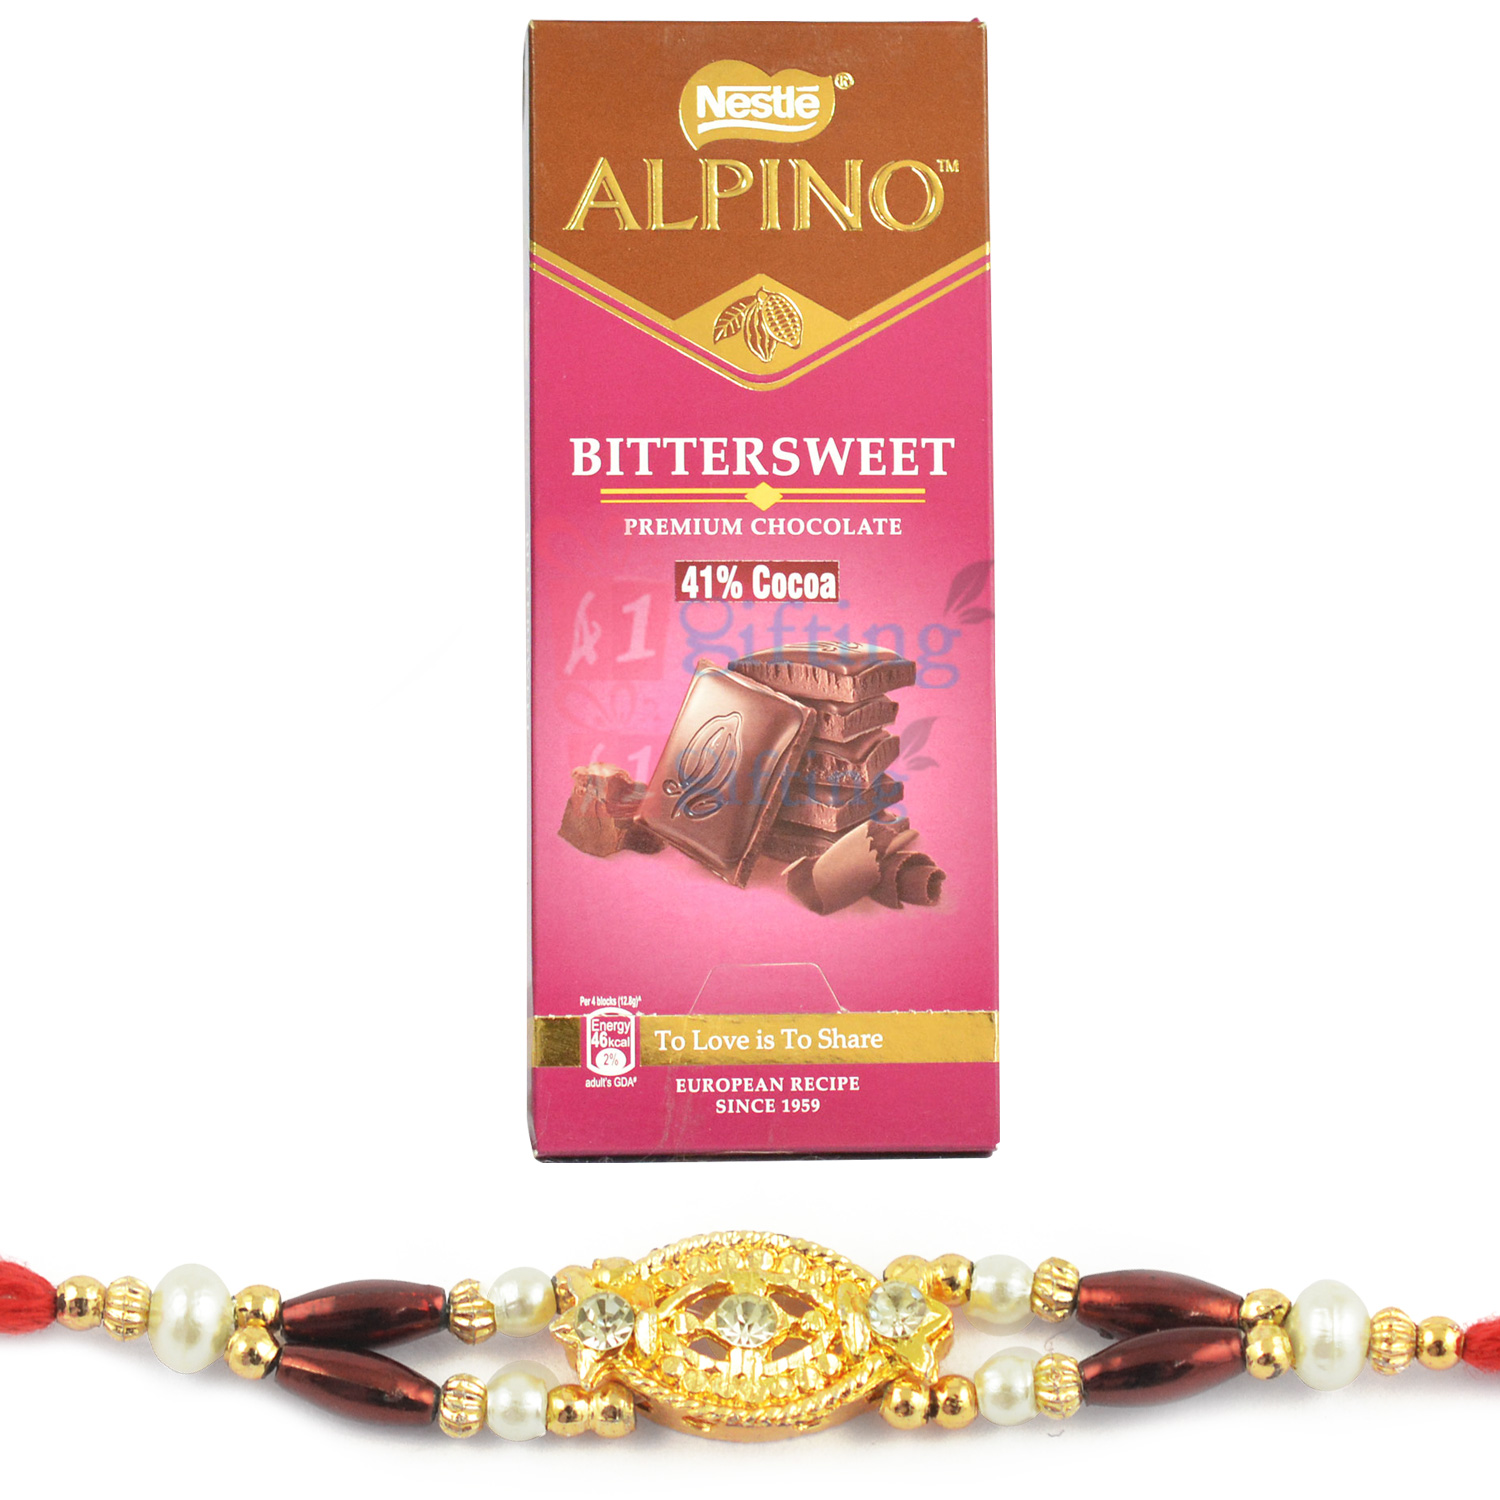 Nestle Alpino Bittersweet Chocolate with Exclusive Beads Rakhi